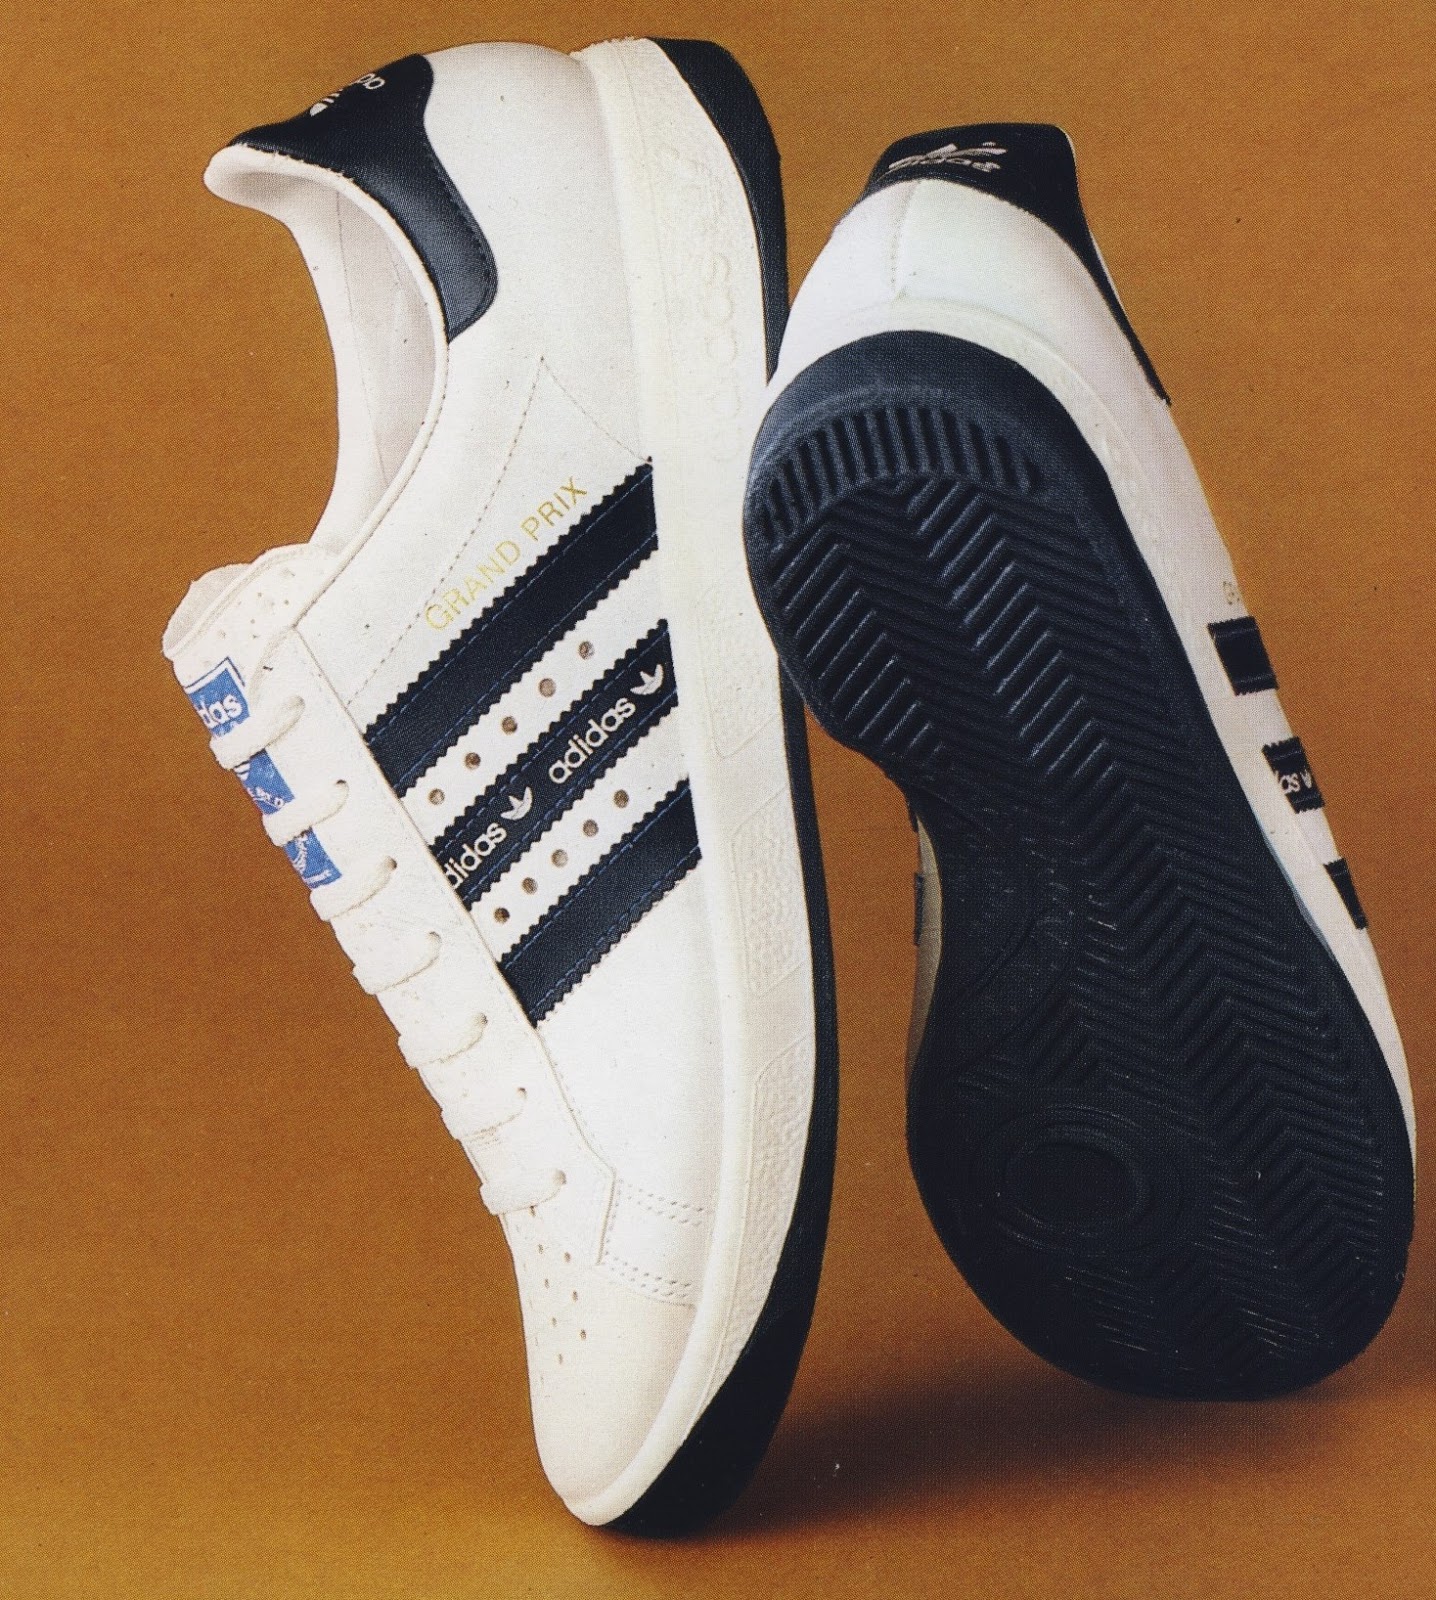 adidas 1985 shoes